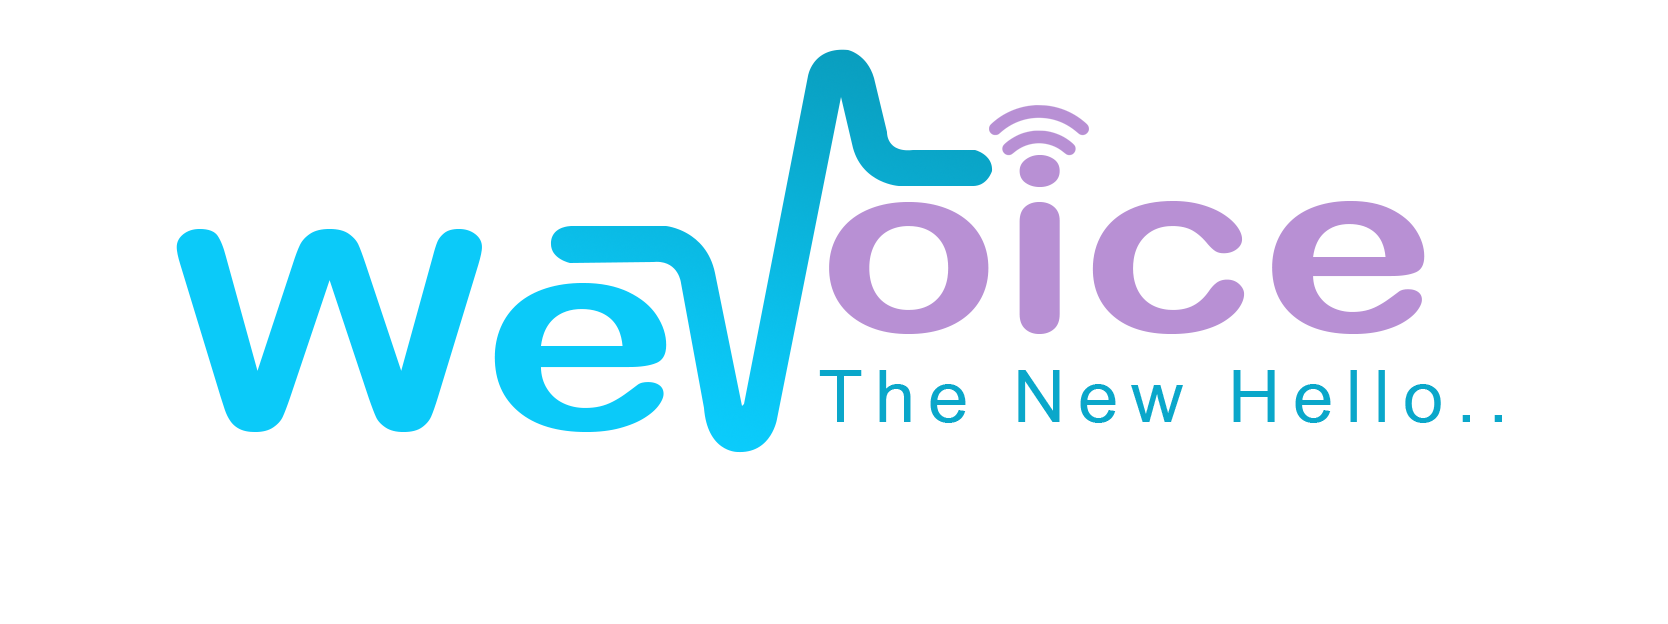 Wevoice logo